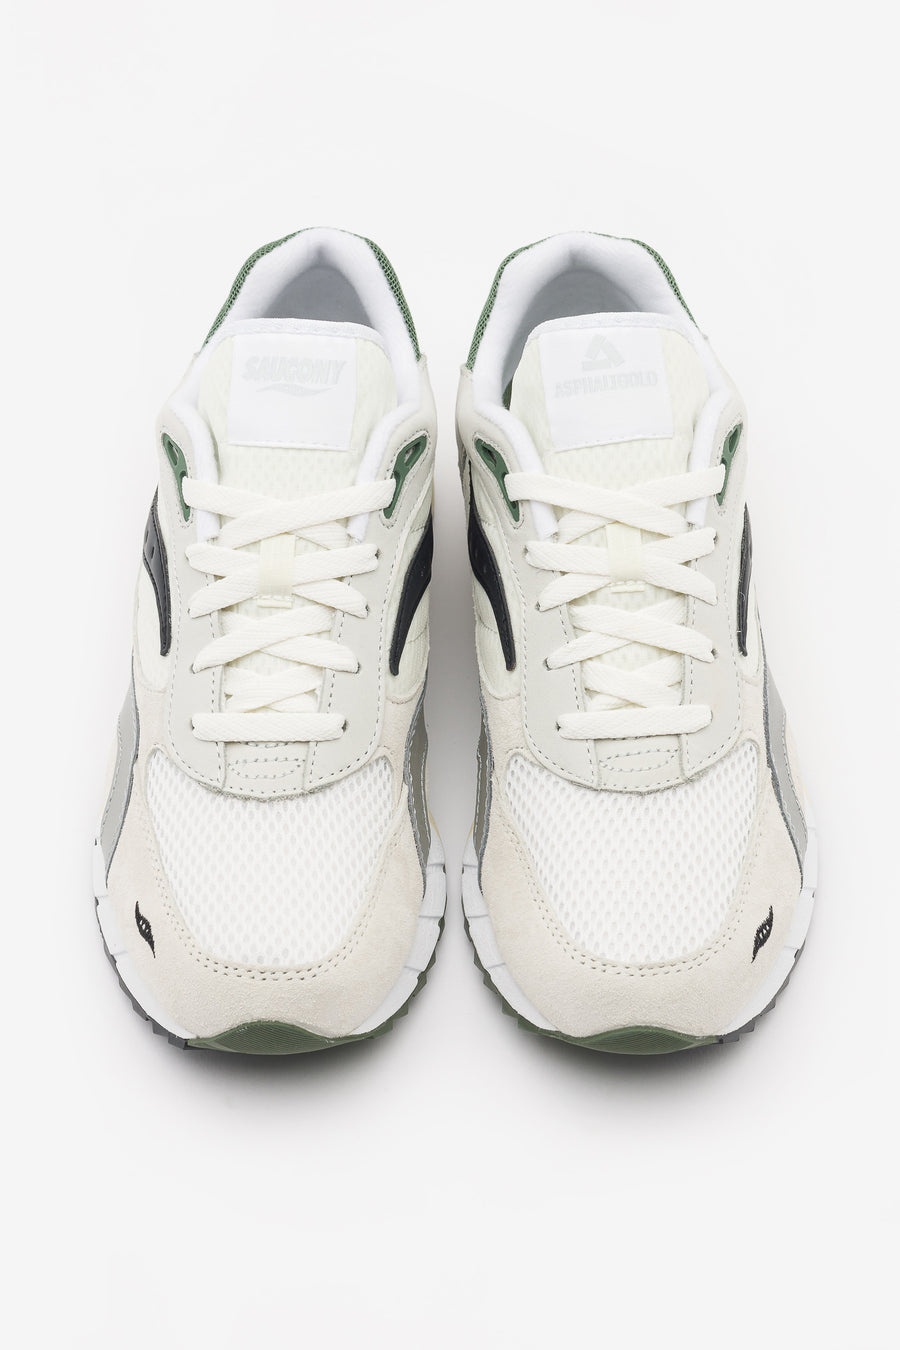 Asphaltgold Shadow 6000 Sneaker in White/Light Grey - 3